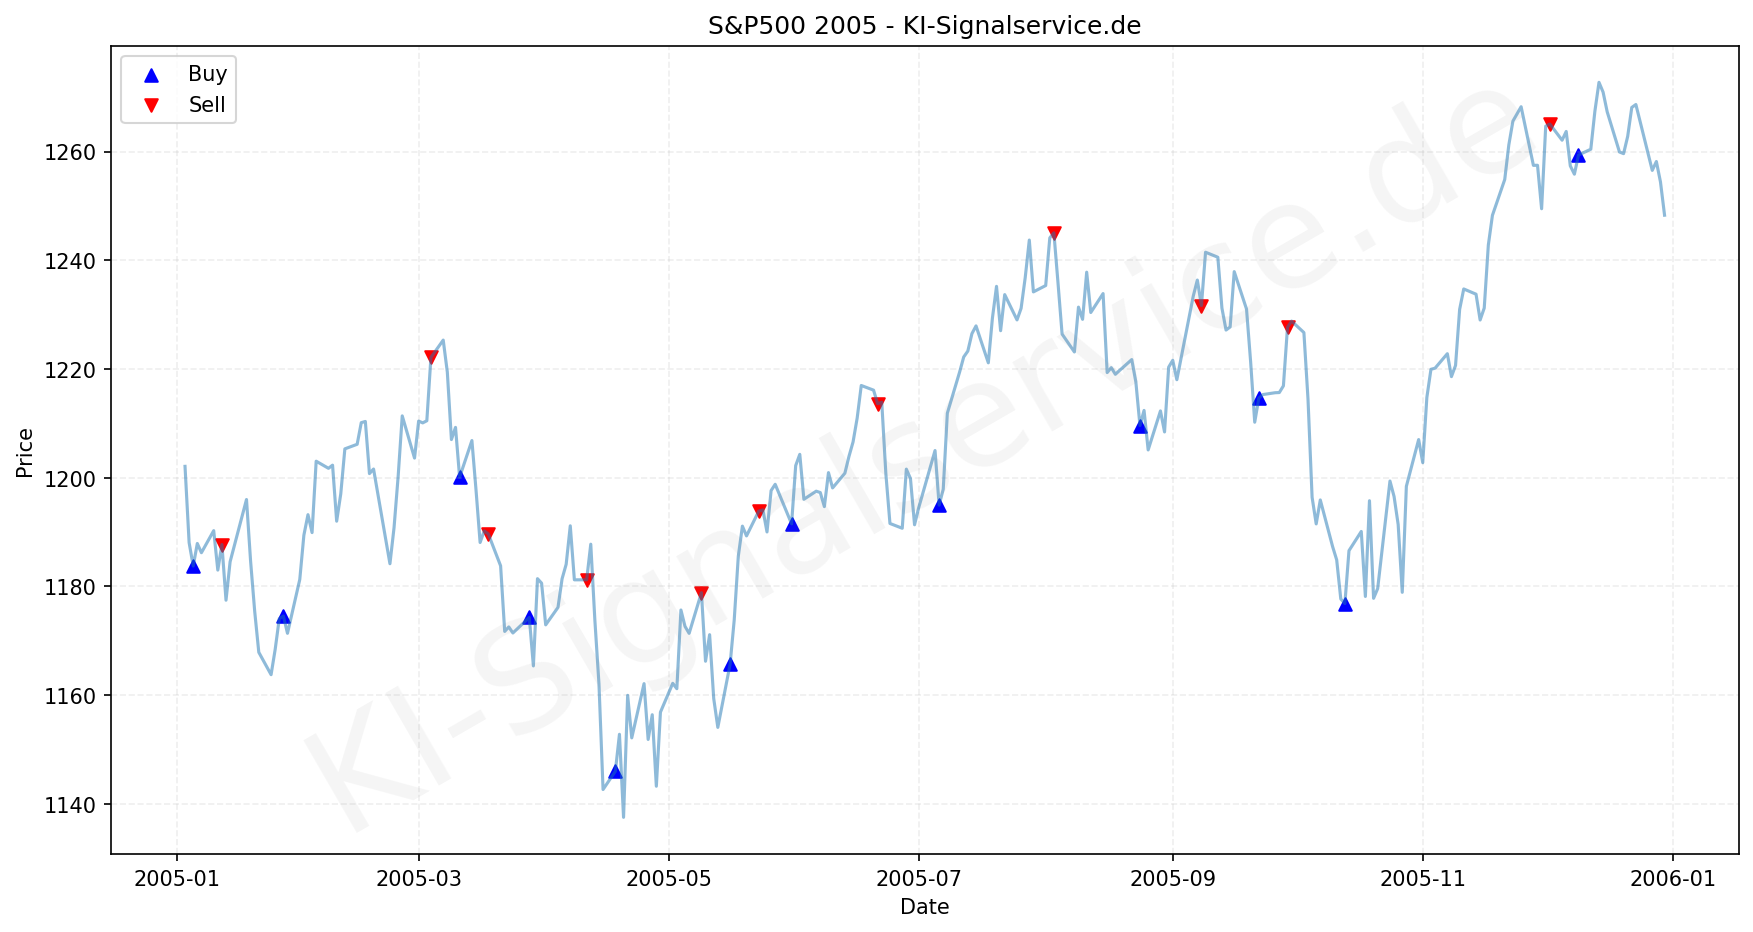 SP500 Index Performance Chart - KI Tradingsignale 2005